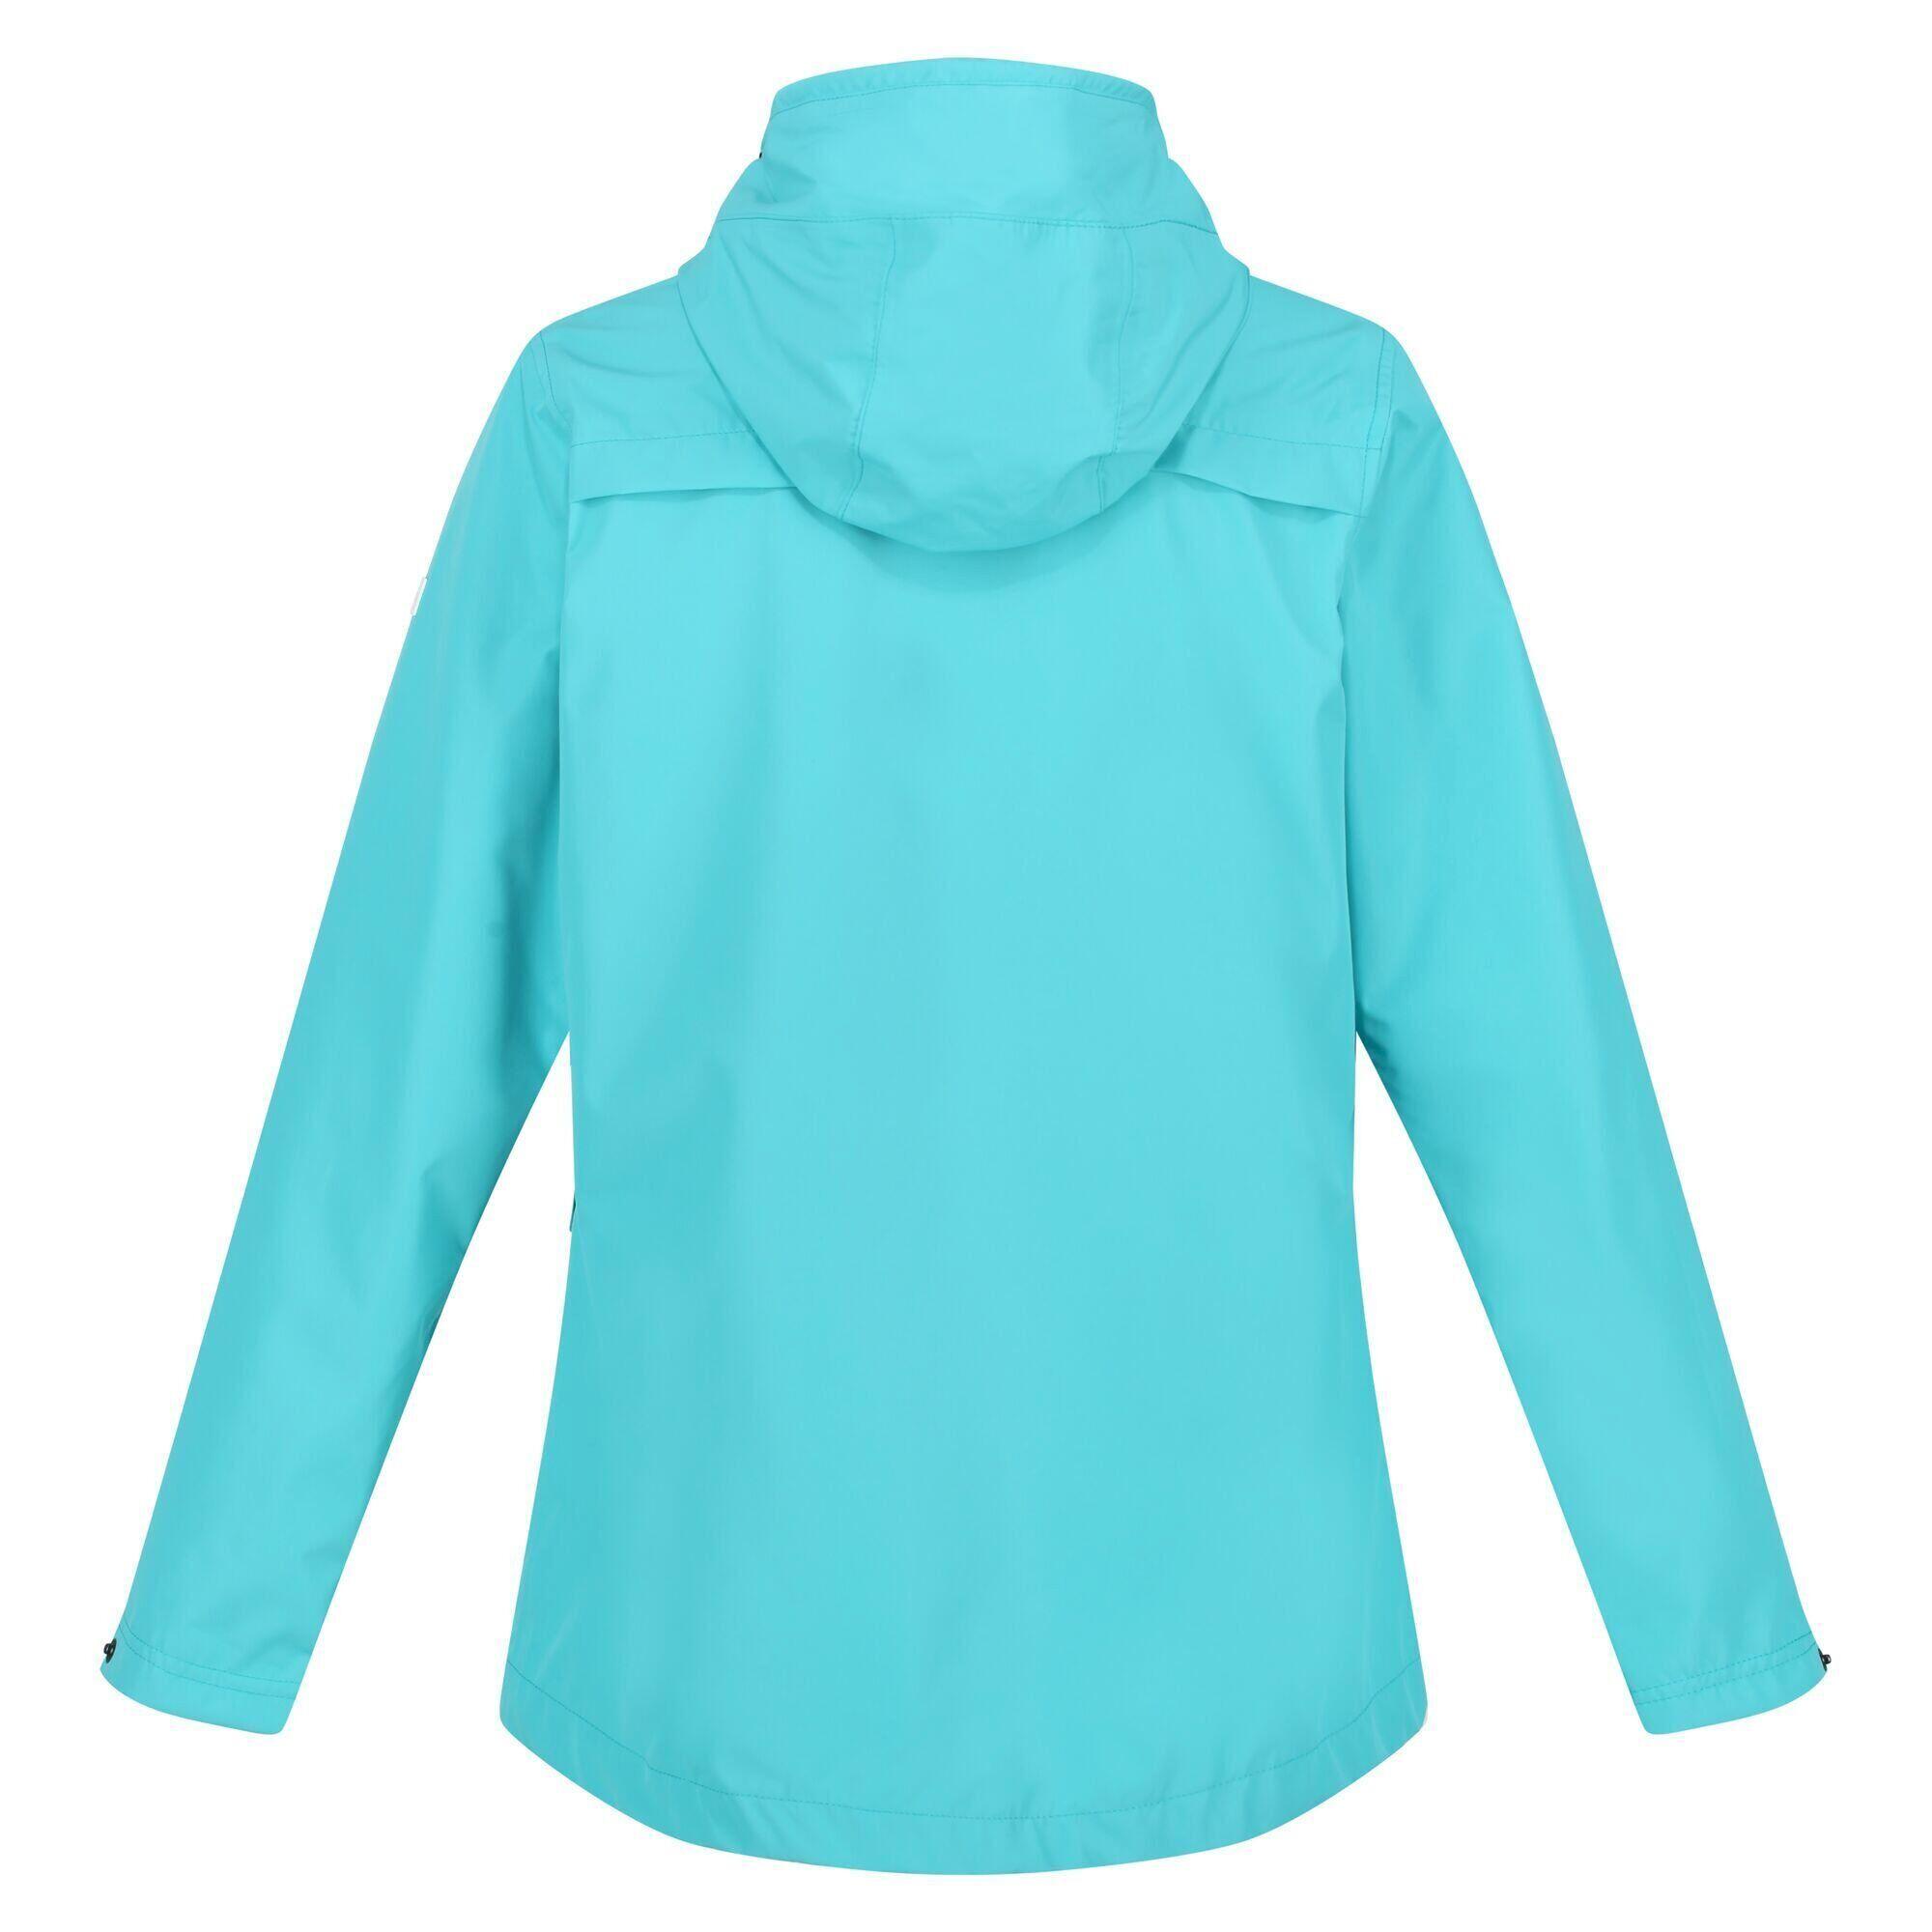 Womens/Ladies Bayarma Lightweight Waterproof Jacket (Turquoise) 2/5